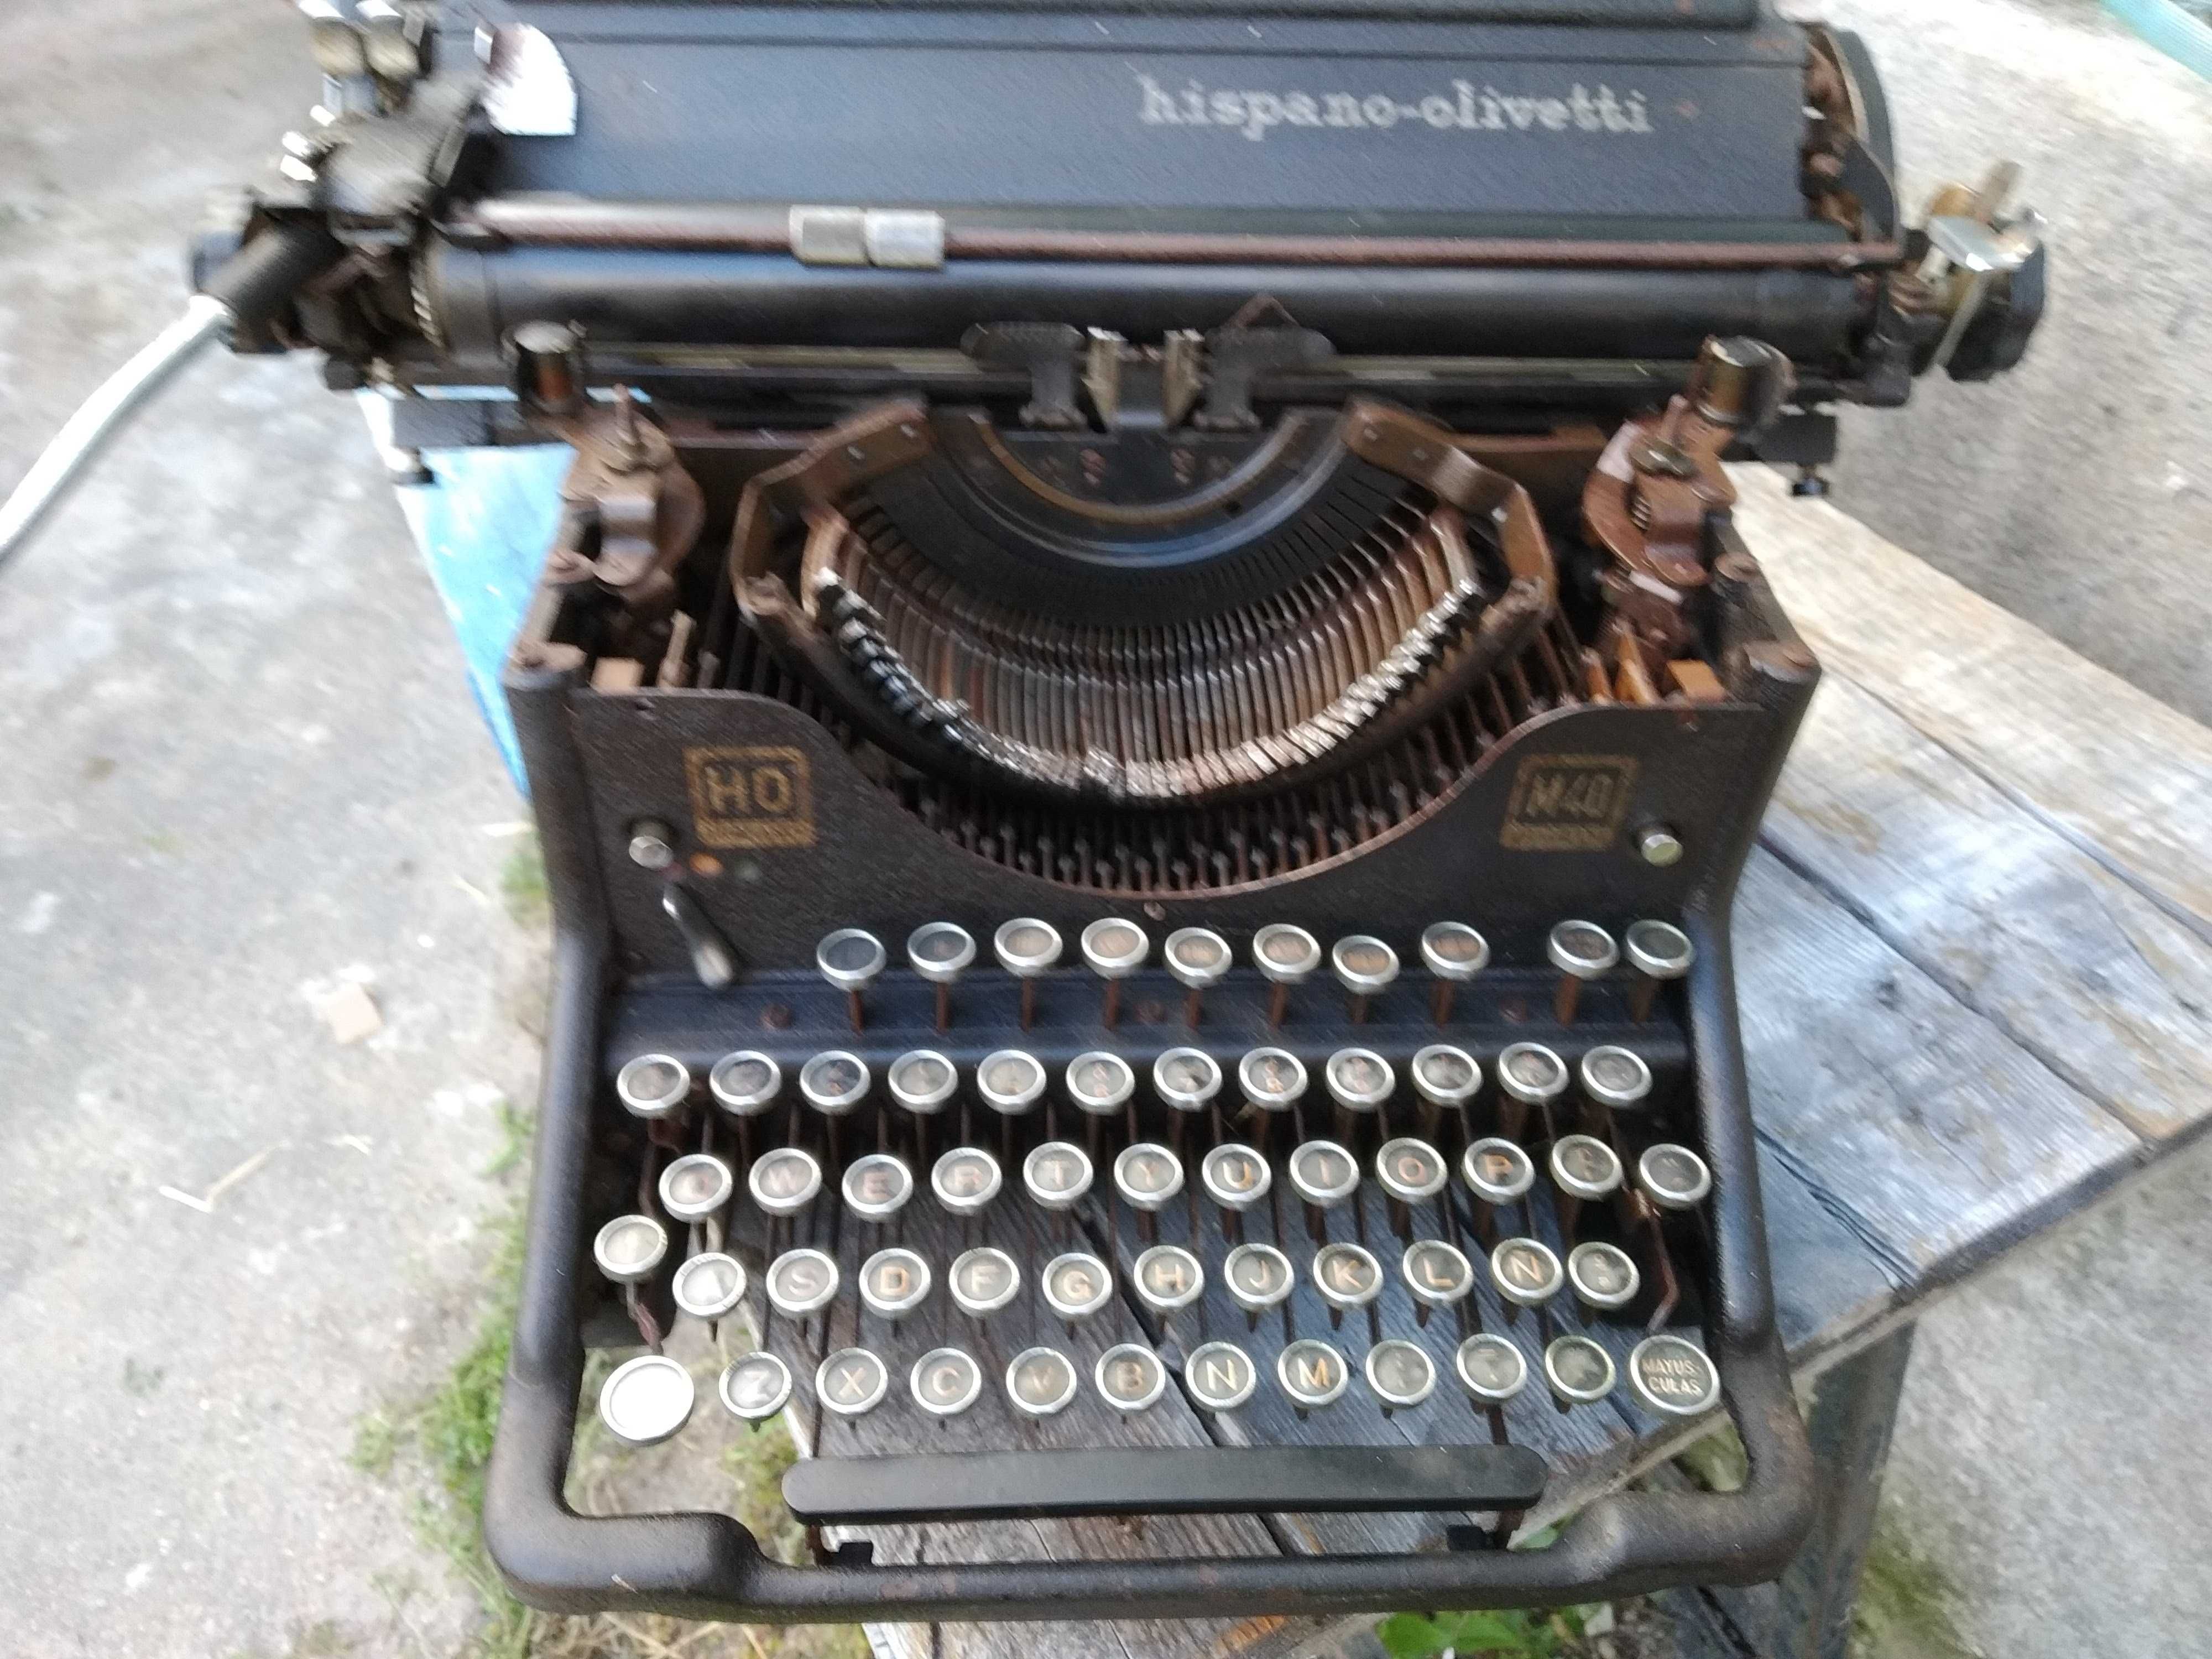 Antiga máquina de escrever Hispano-Olivetti